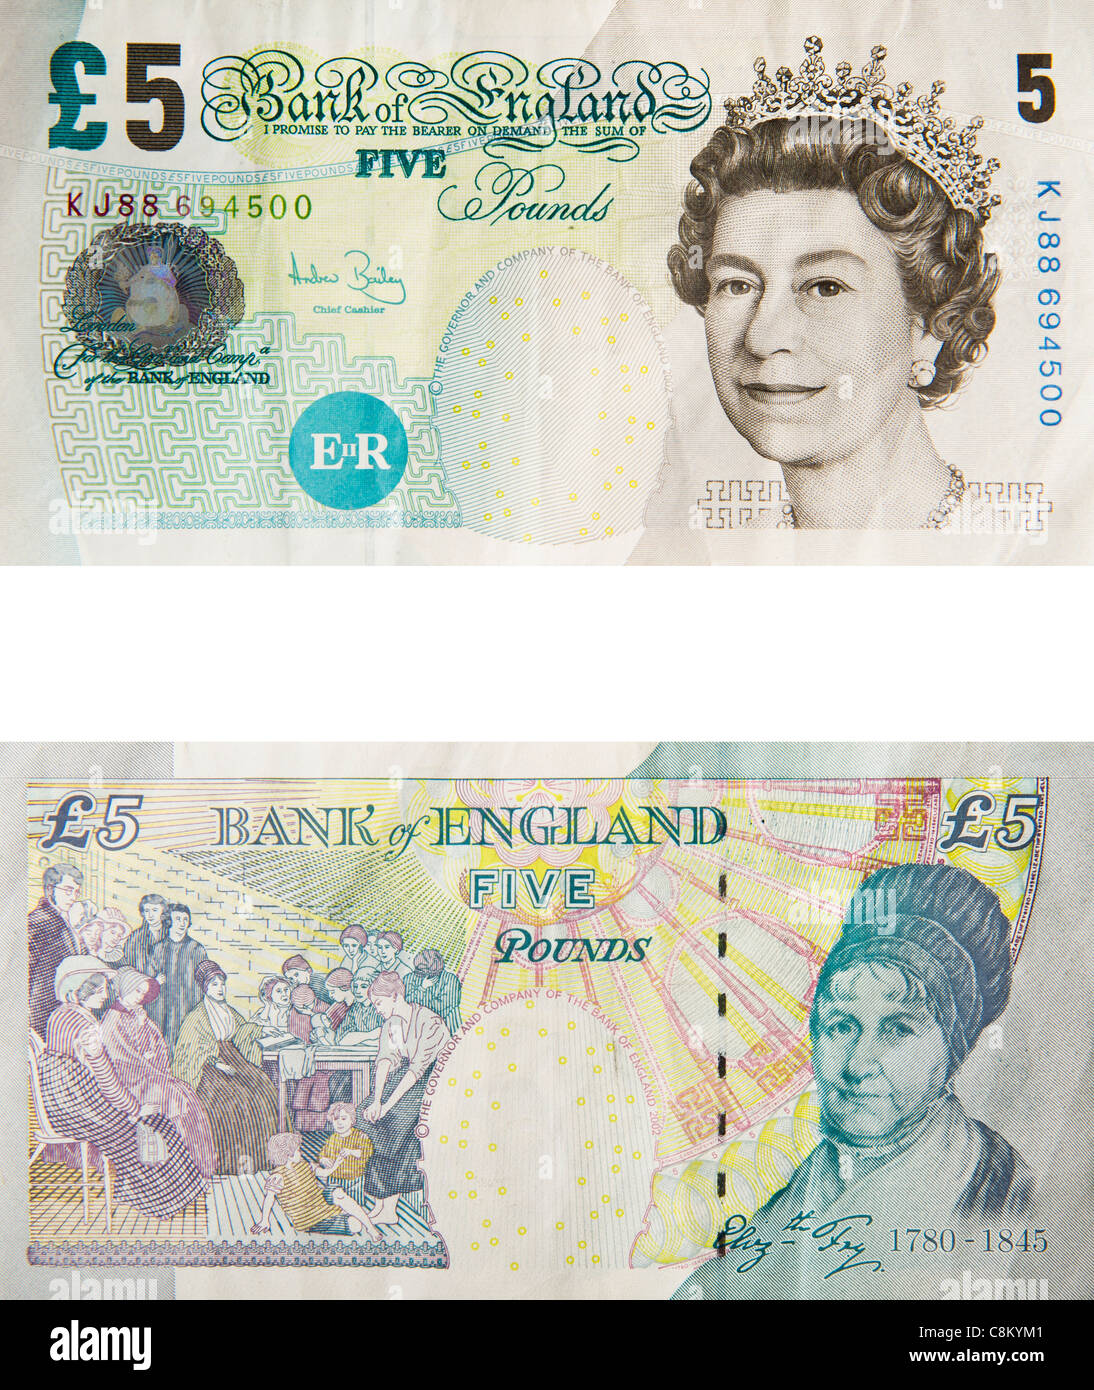 5 five pounds note sterling Stock Photo - Alamy